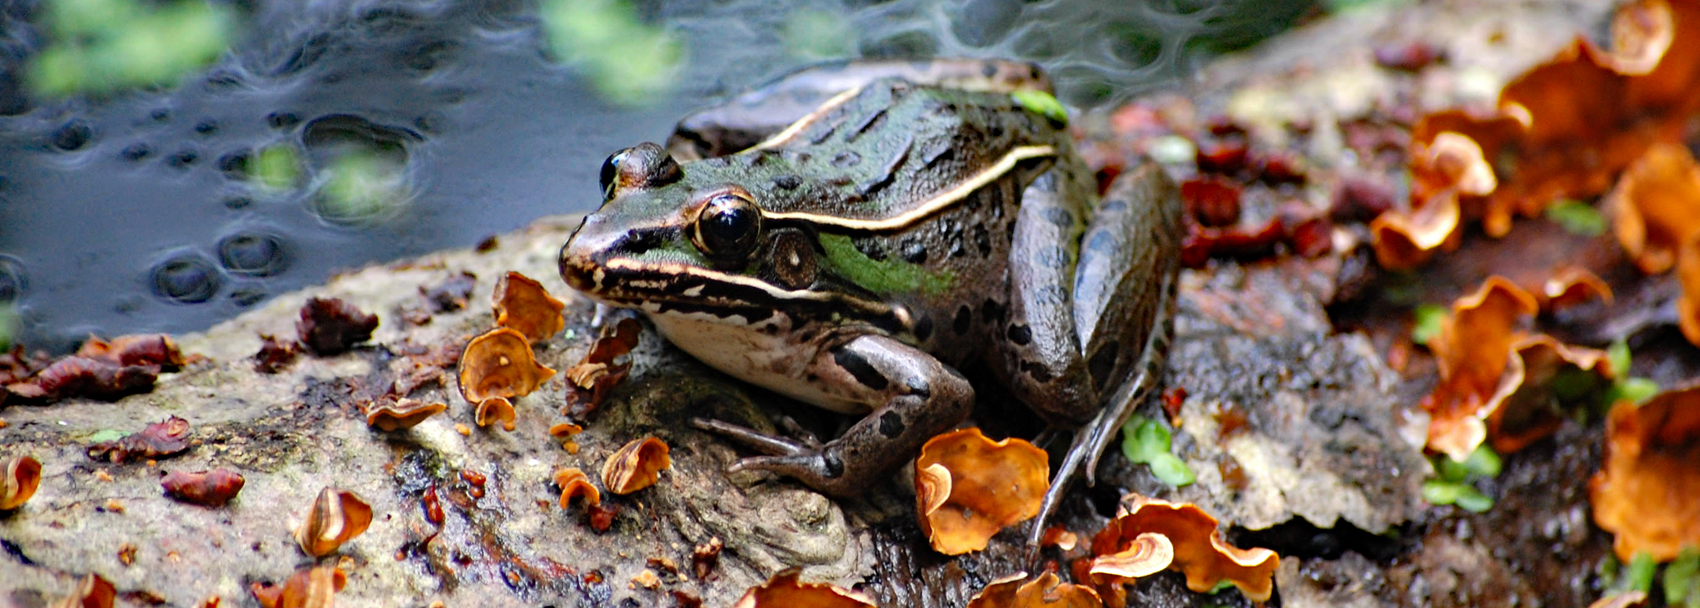 Frog sitting on a log